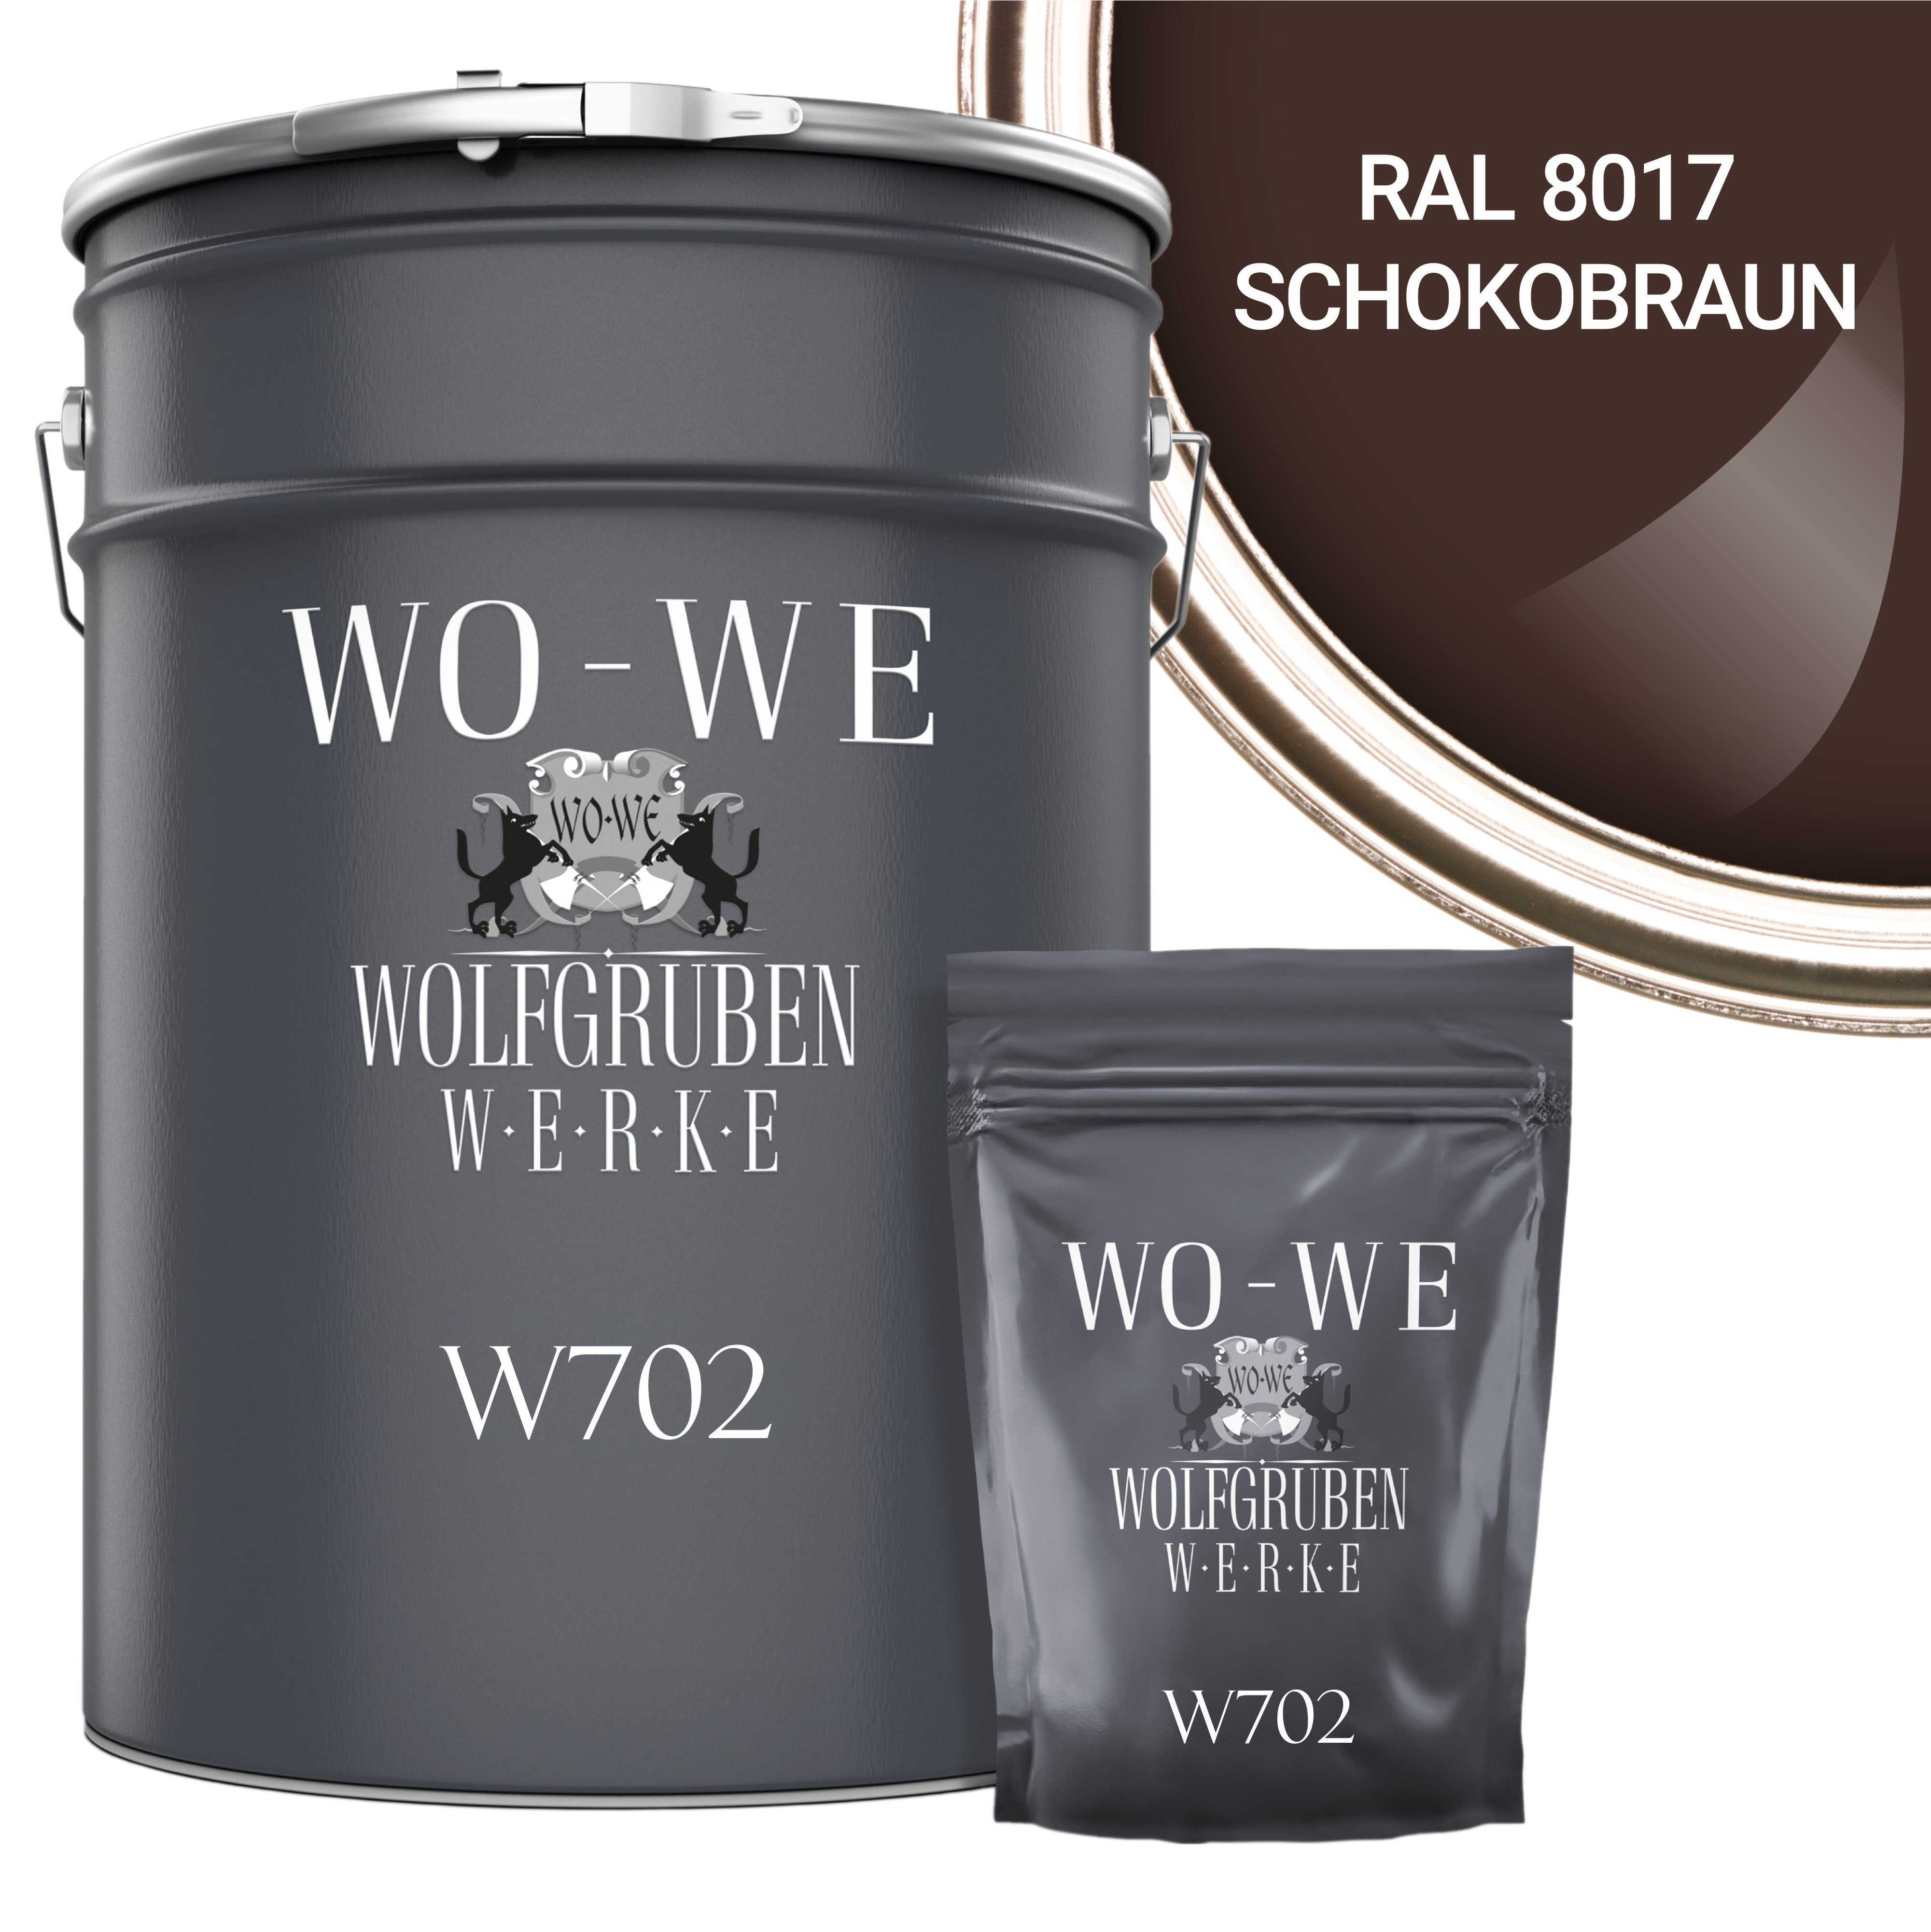 WO-WE Bodenversiegelung W702, Epoxidharz Schokoladenbraun Seidenglänzend, 2,5-20Kg, 8017 Garagenfarbe Bodenbeschichtung 2K RAL